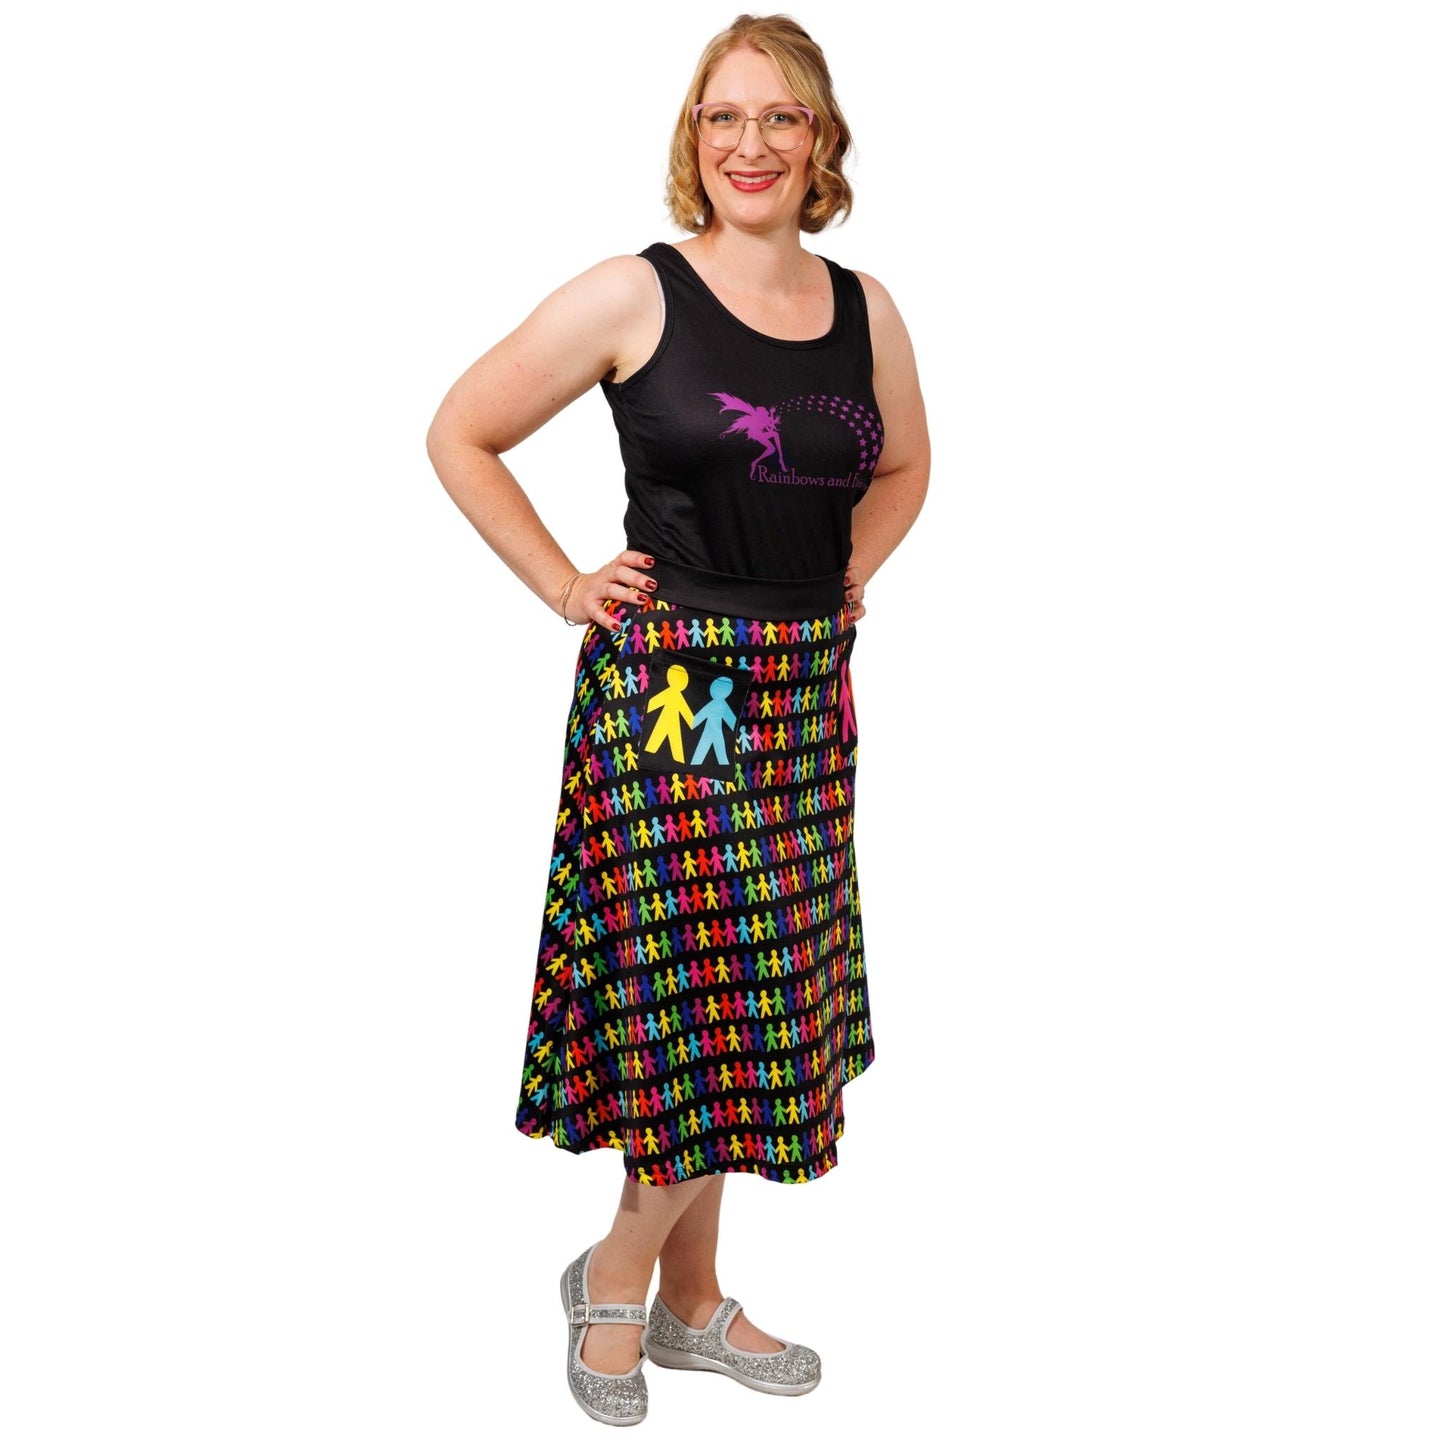 Paperdolls Original Skirt by RainbowsAndFairies.com (Dolls - Paper - Art - Skirt With Pockets - Aline Skirt - Vintage Inspired) - SKU: CL_OSKRT_PAPER_ORG - Pic 04